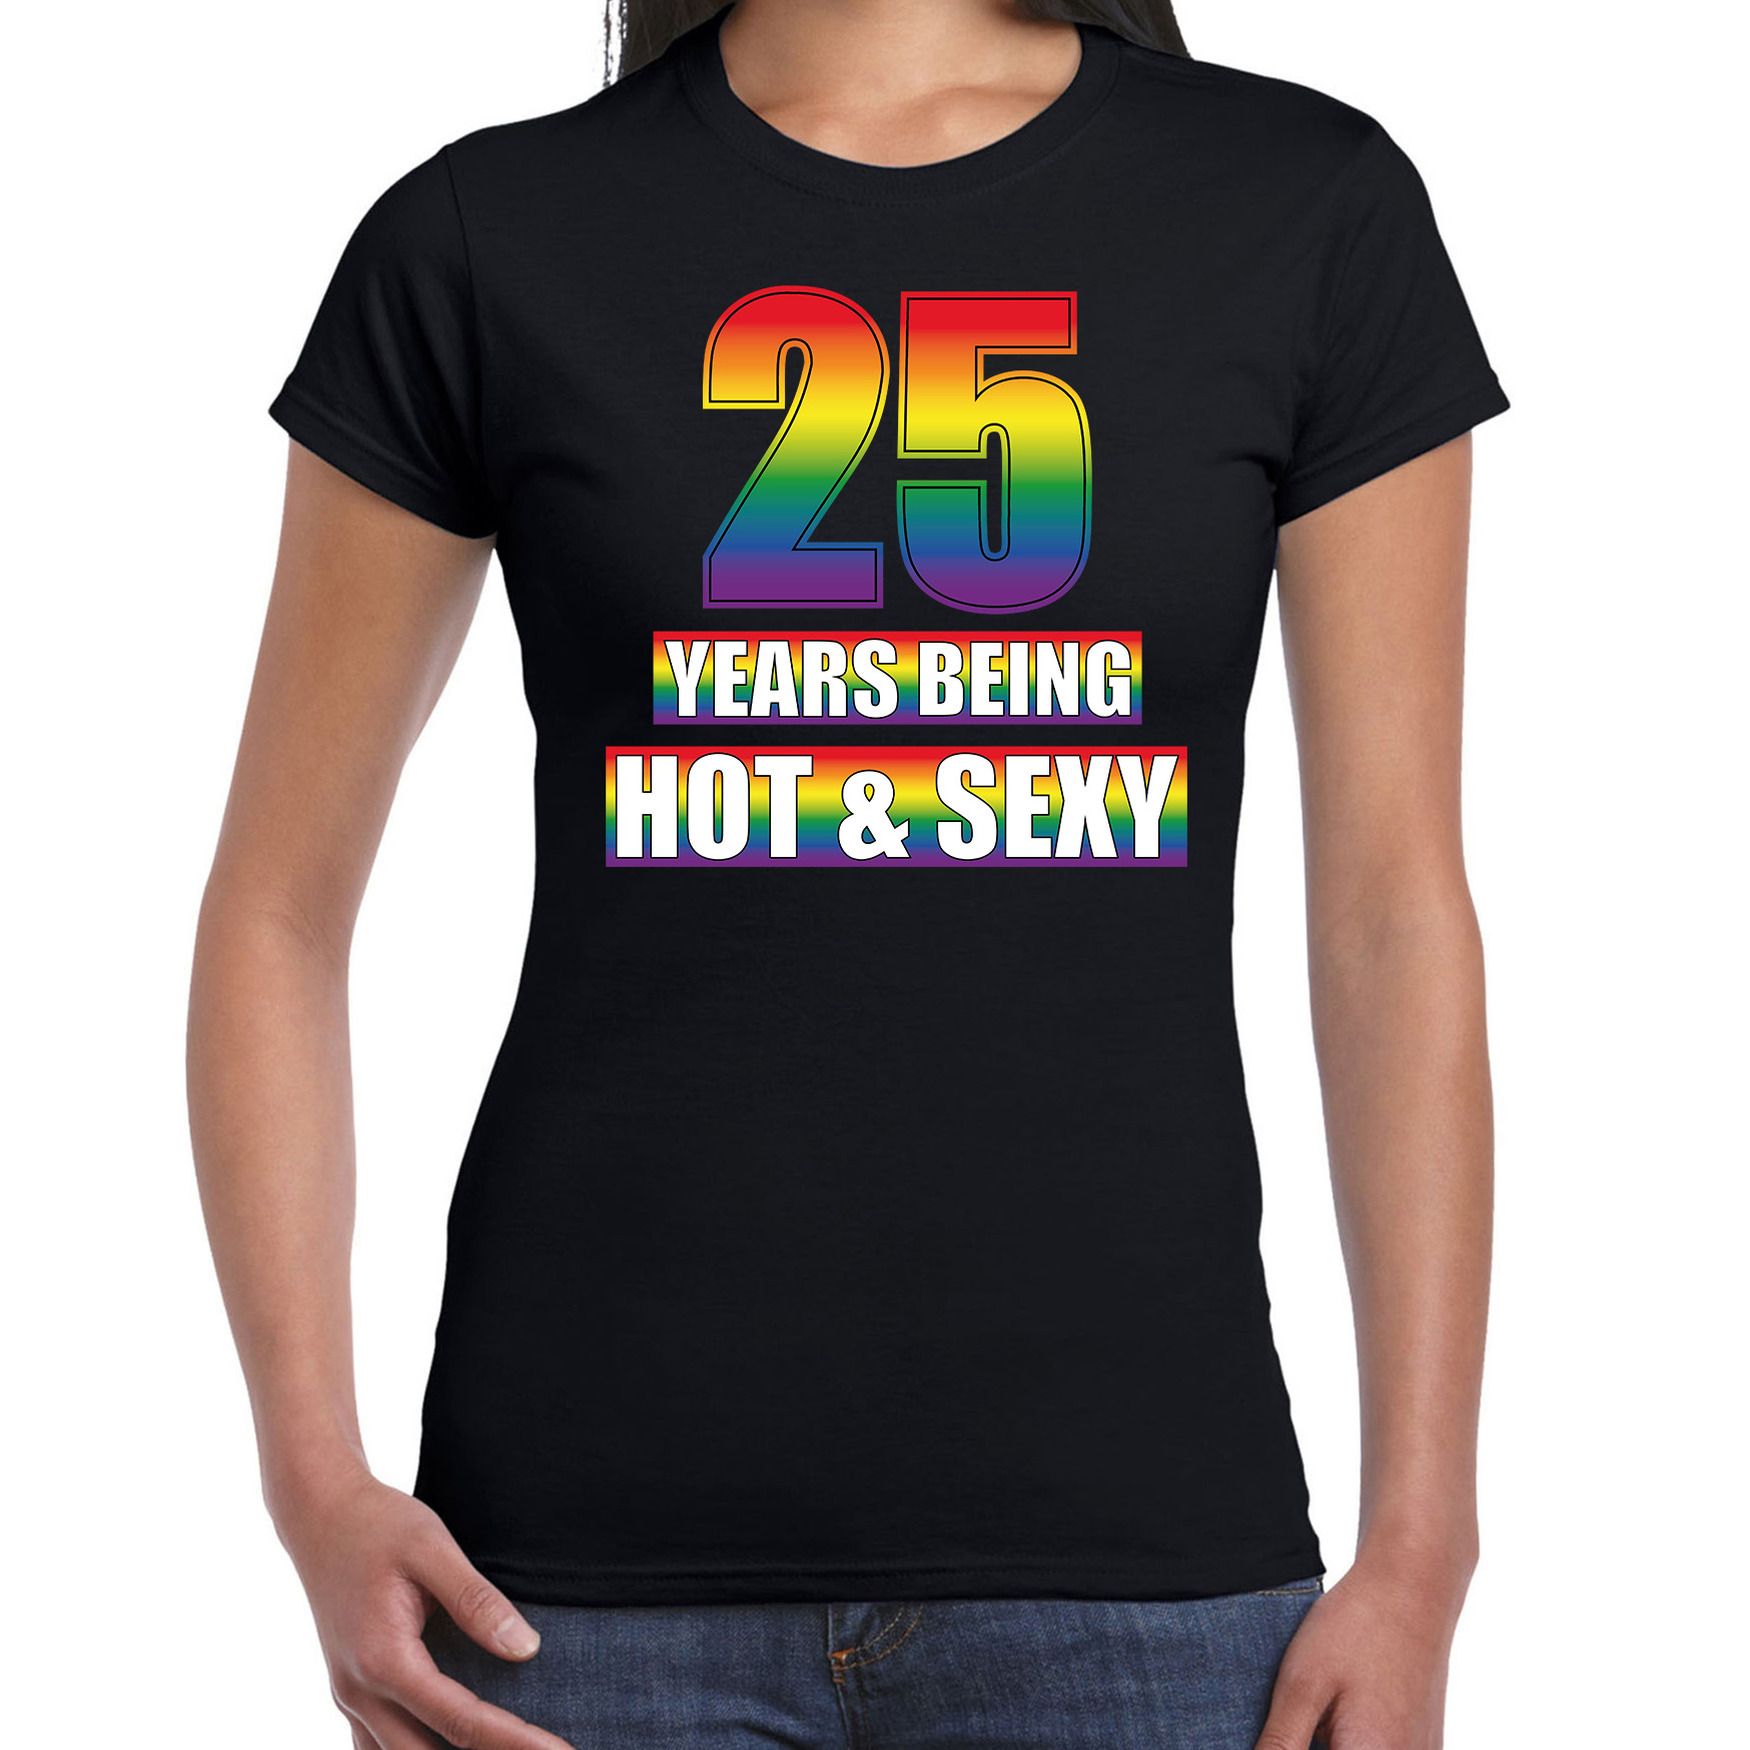 Hot en sexy 25 jaar verjaardag cadeau t-shirt zwart voor dames Gay- LHBT kleding-outfit